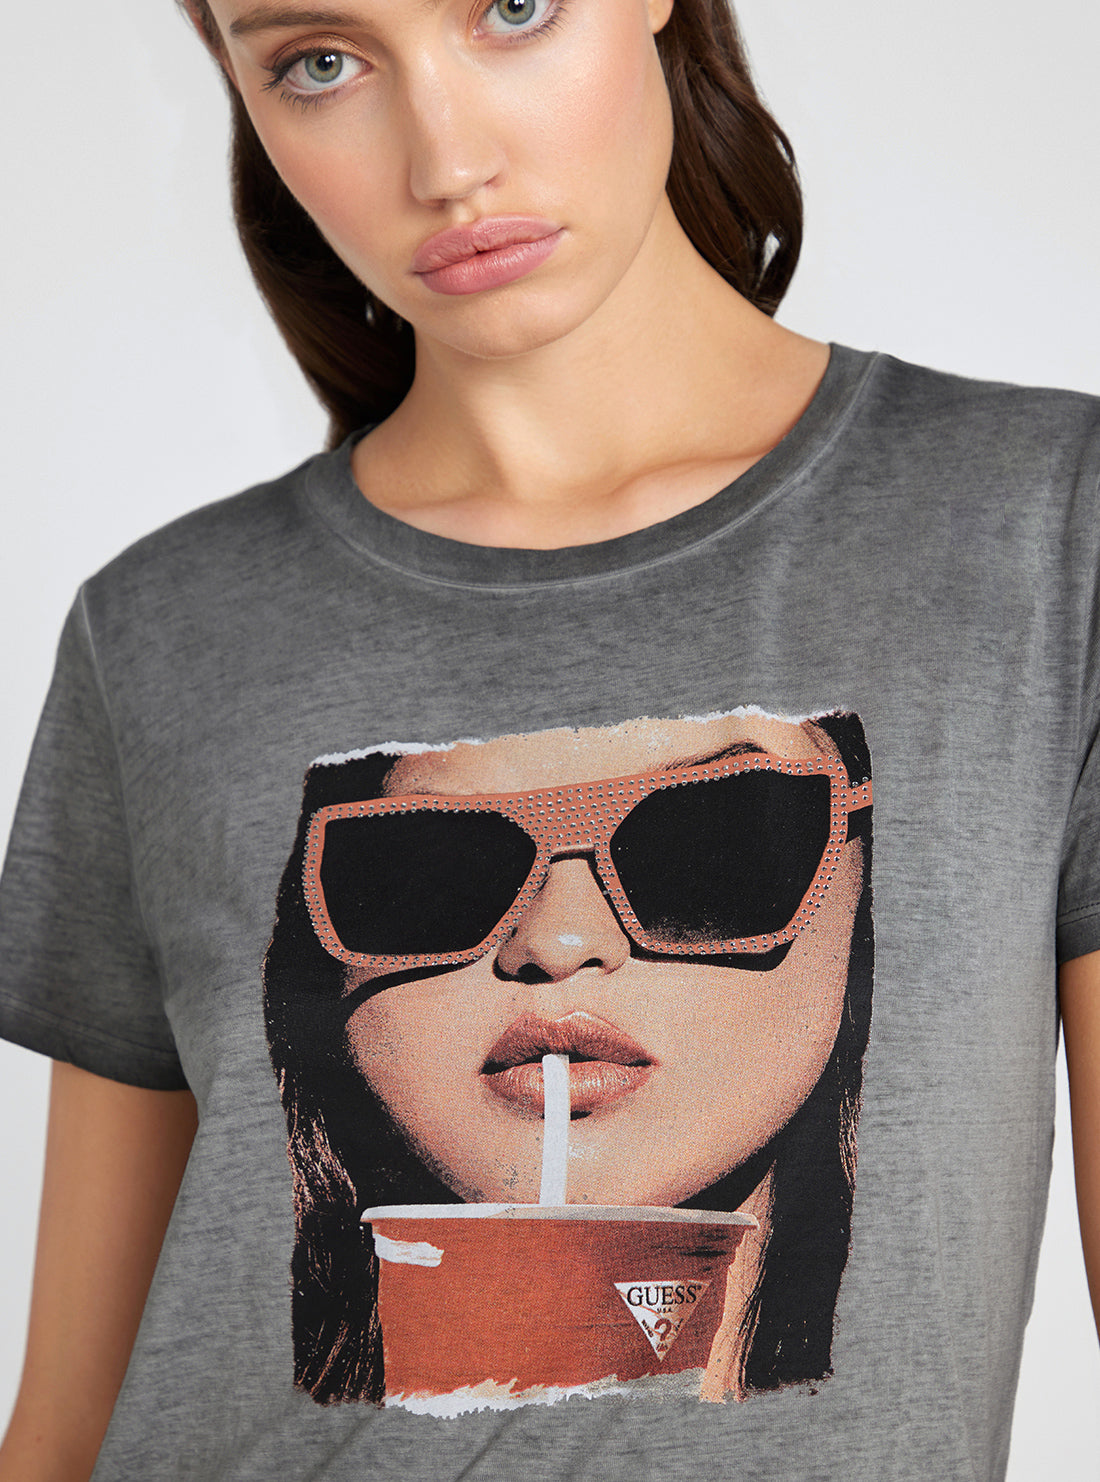 Grey Summer Girl Graphic T-Shirt | GUESS Women's Apparel | detail view